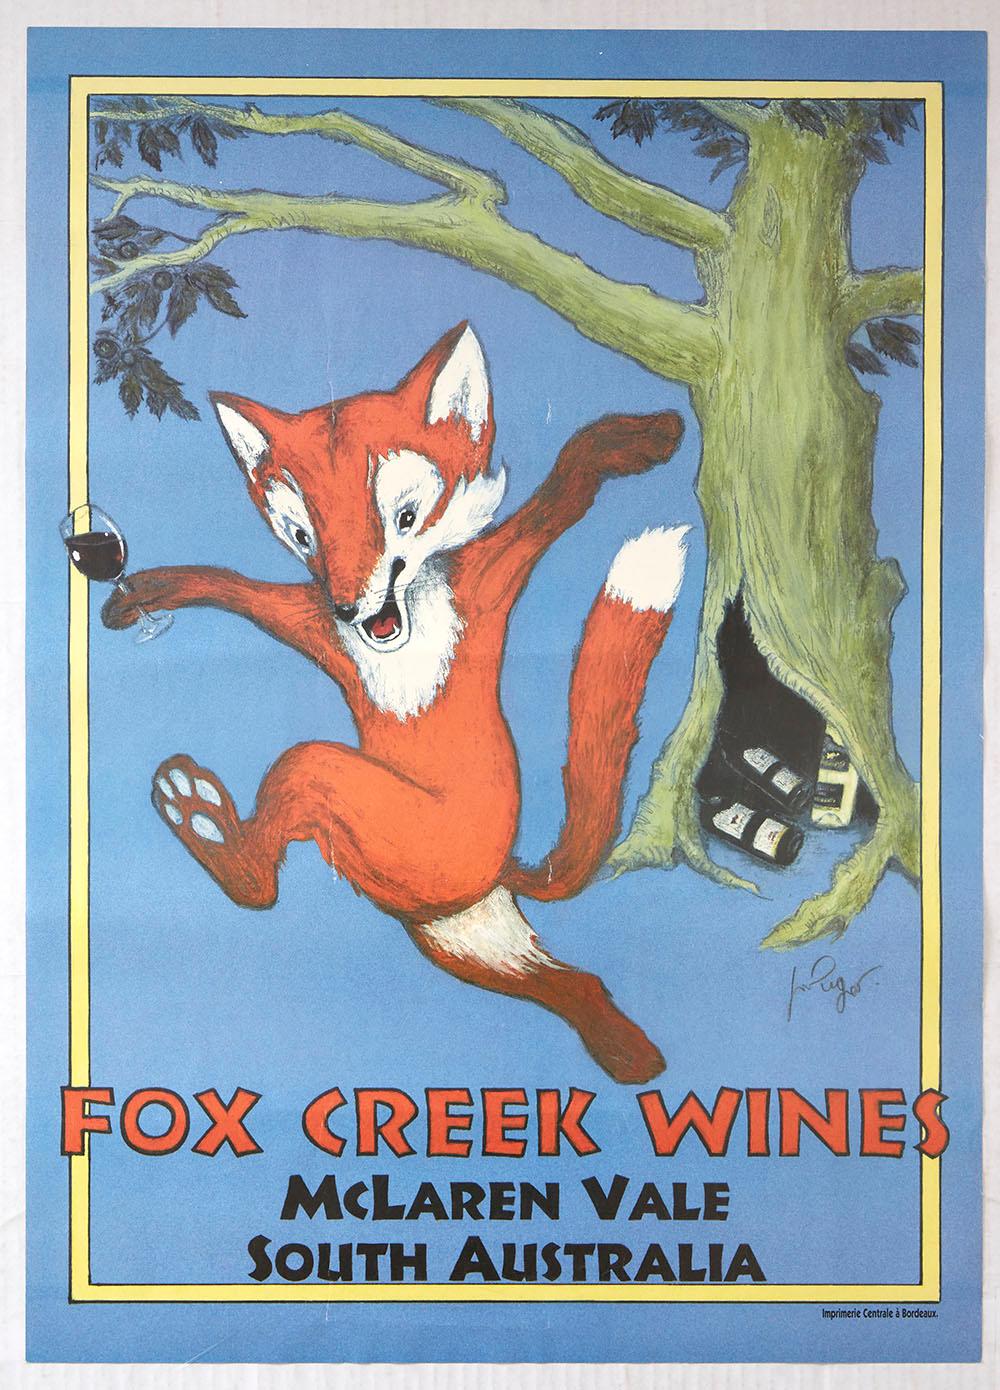 Jean-Pierre Got Print - Original Vintage Poster Fox Creek Wines McLaren Vale South Australia Drink Ad